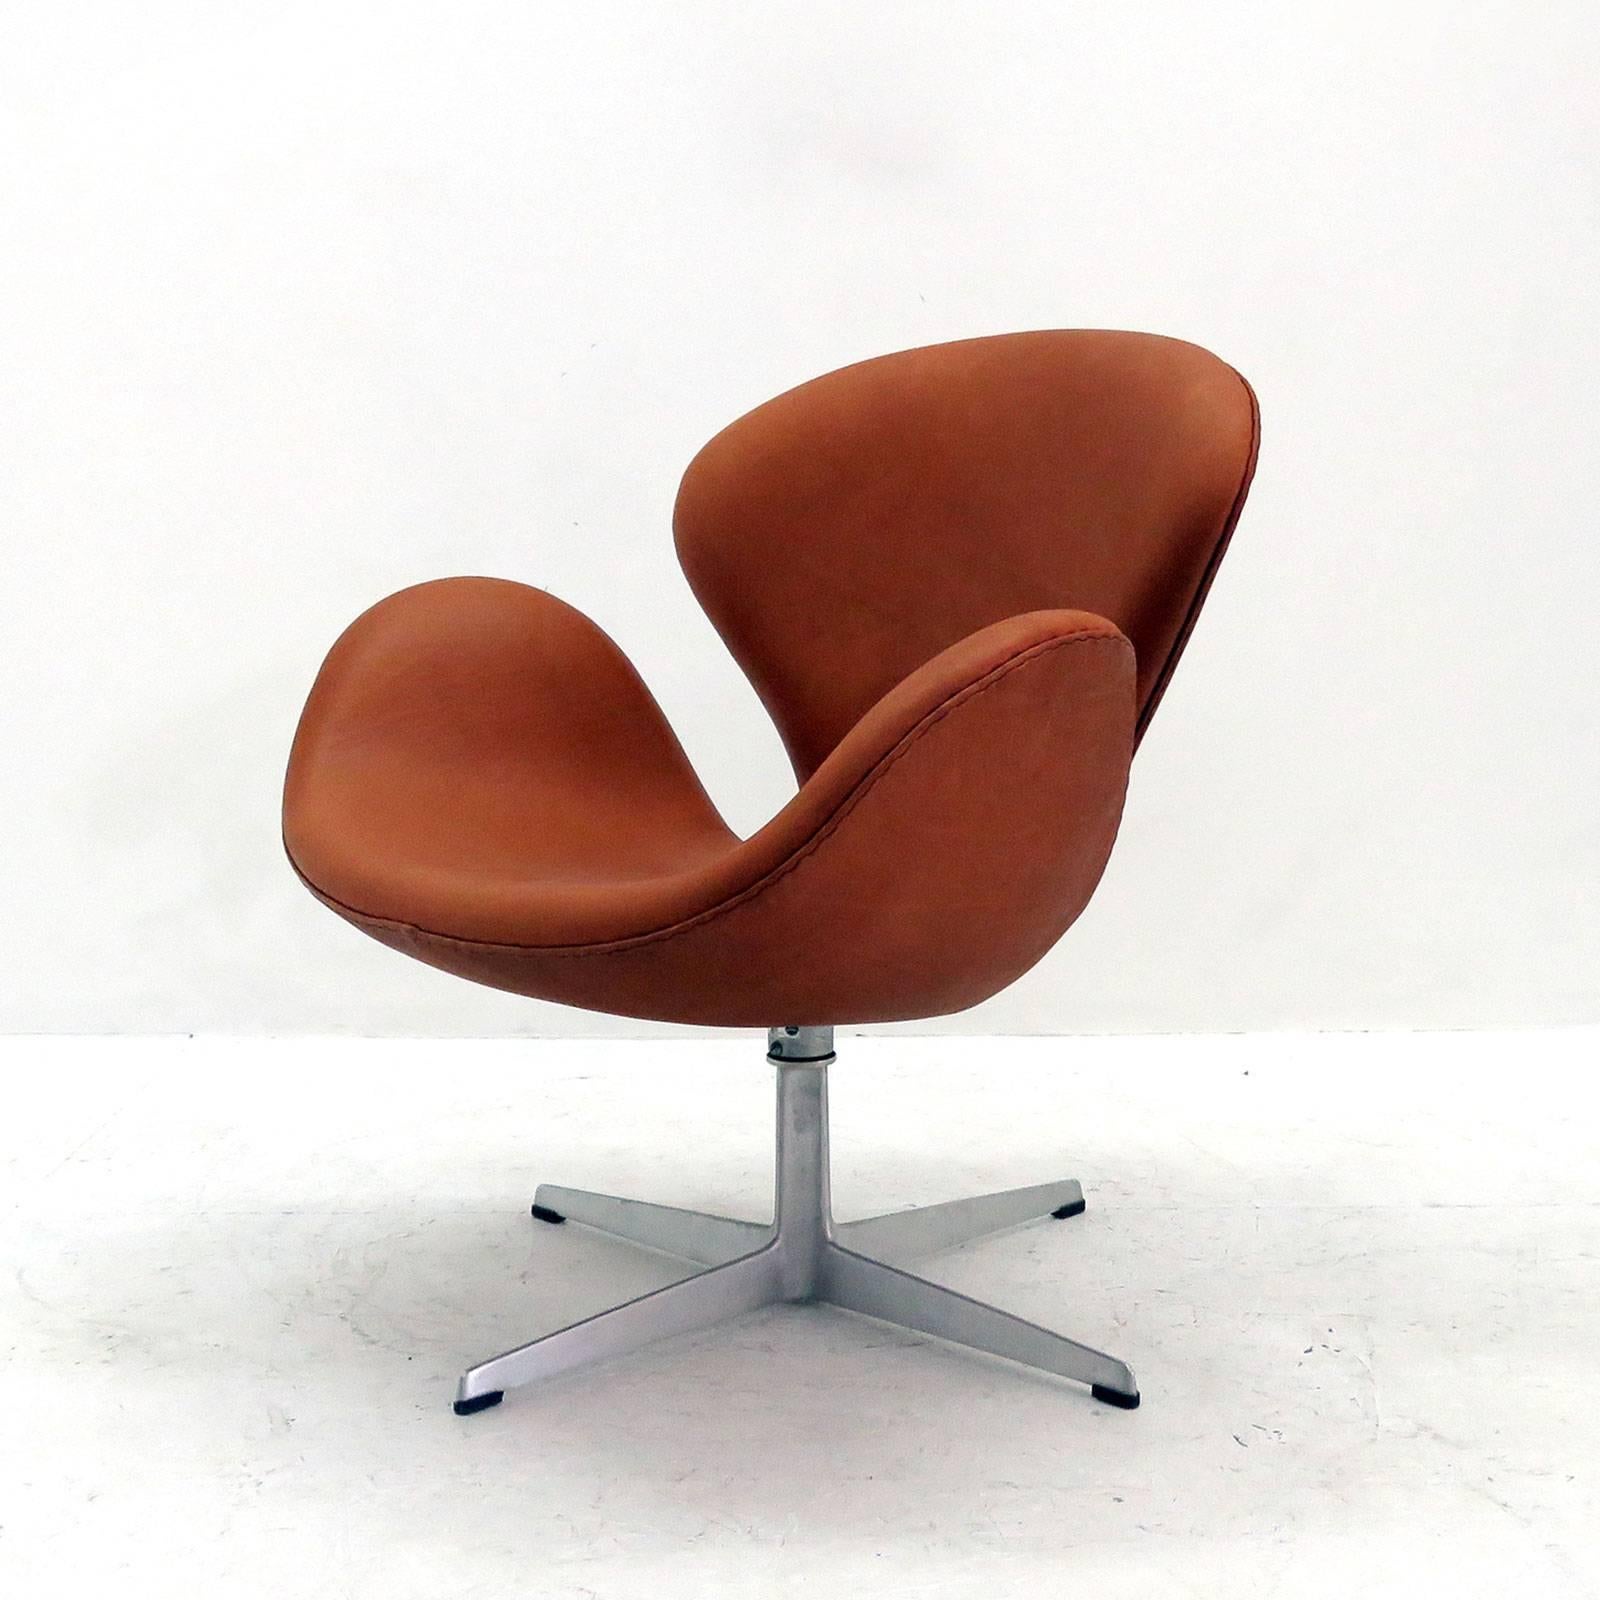 Stunning 'Swan' chair, Model 3320, by Arne Jacobsen, lounge chair on four-star aluminum base, upholstered in cognac range aniline leather, originally designed 1957-1958 for the Hotel Royal in Copenhagen, marked Fritz Hansen.